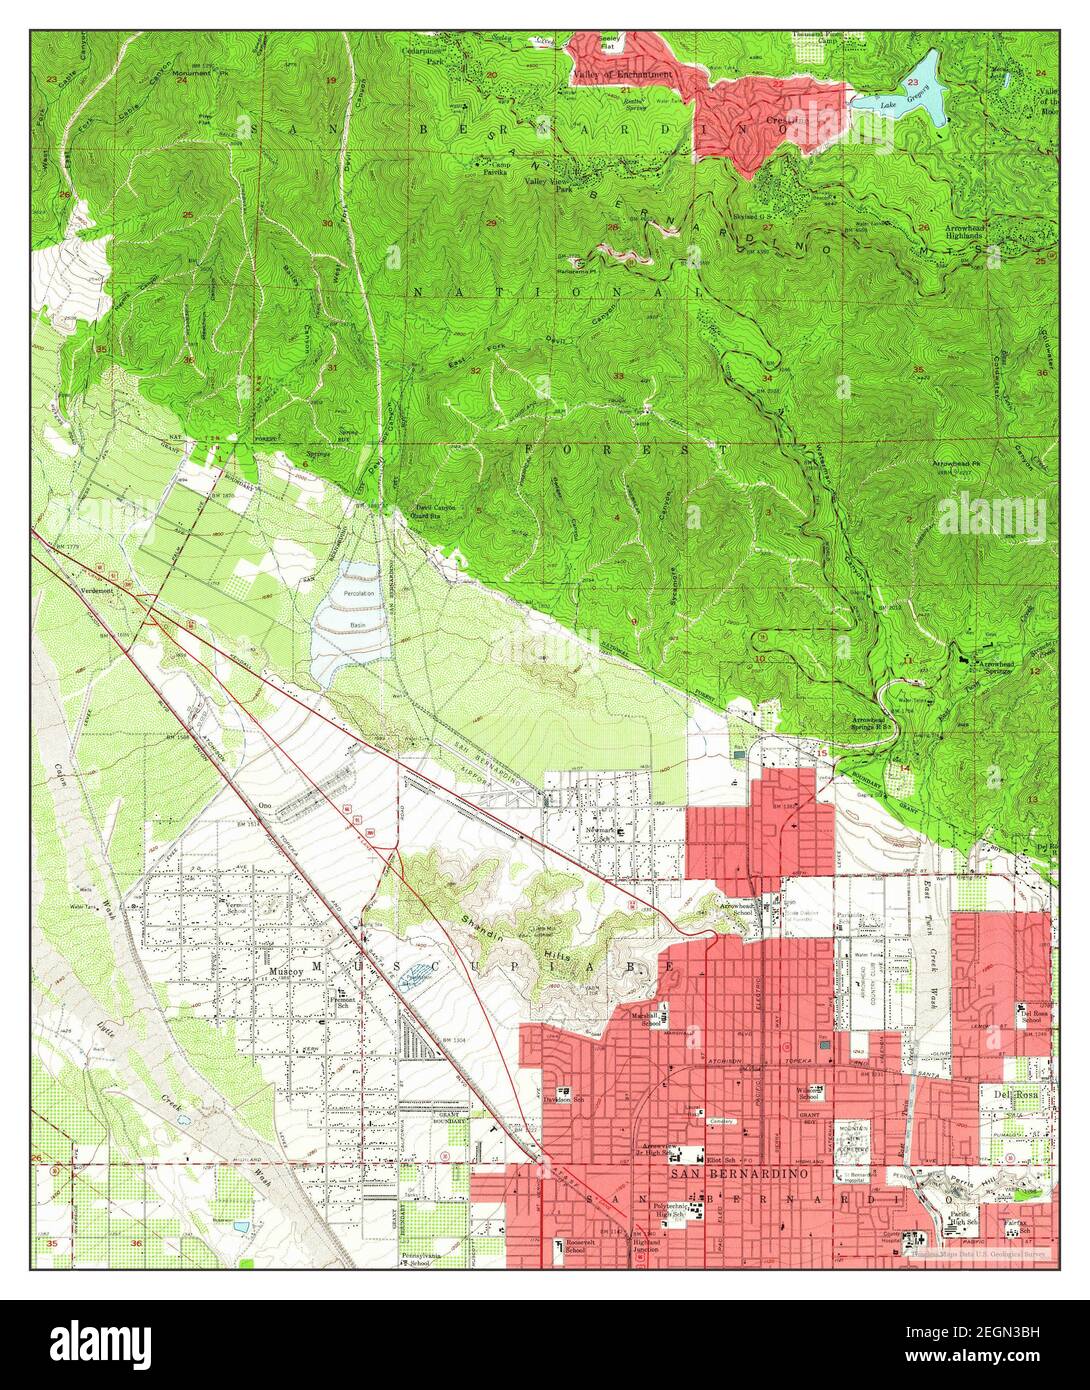 San Bernardino North, California, map 1954, 1:24000, United States of America by Timeless Maps, data U.S. Geological Survey Foto Stock